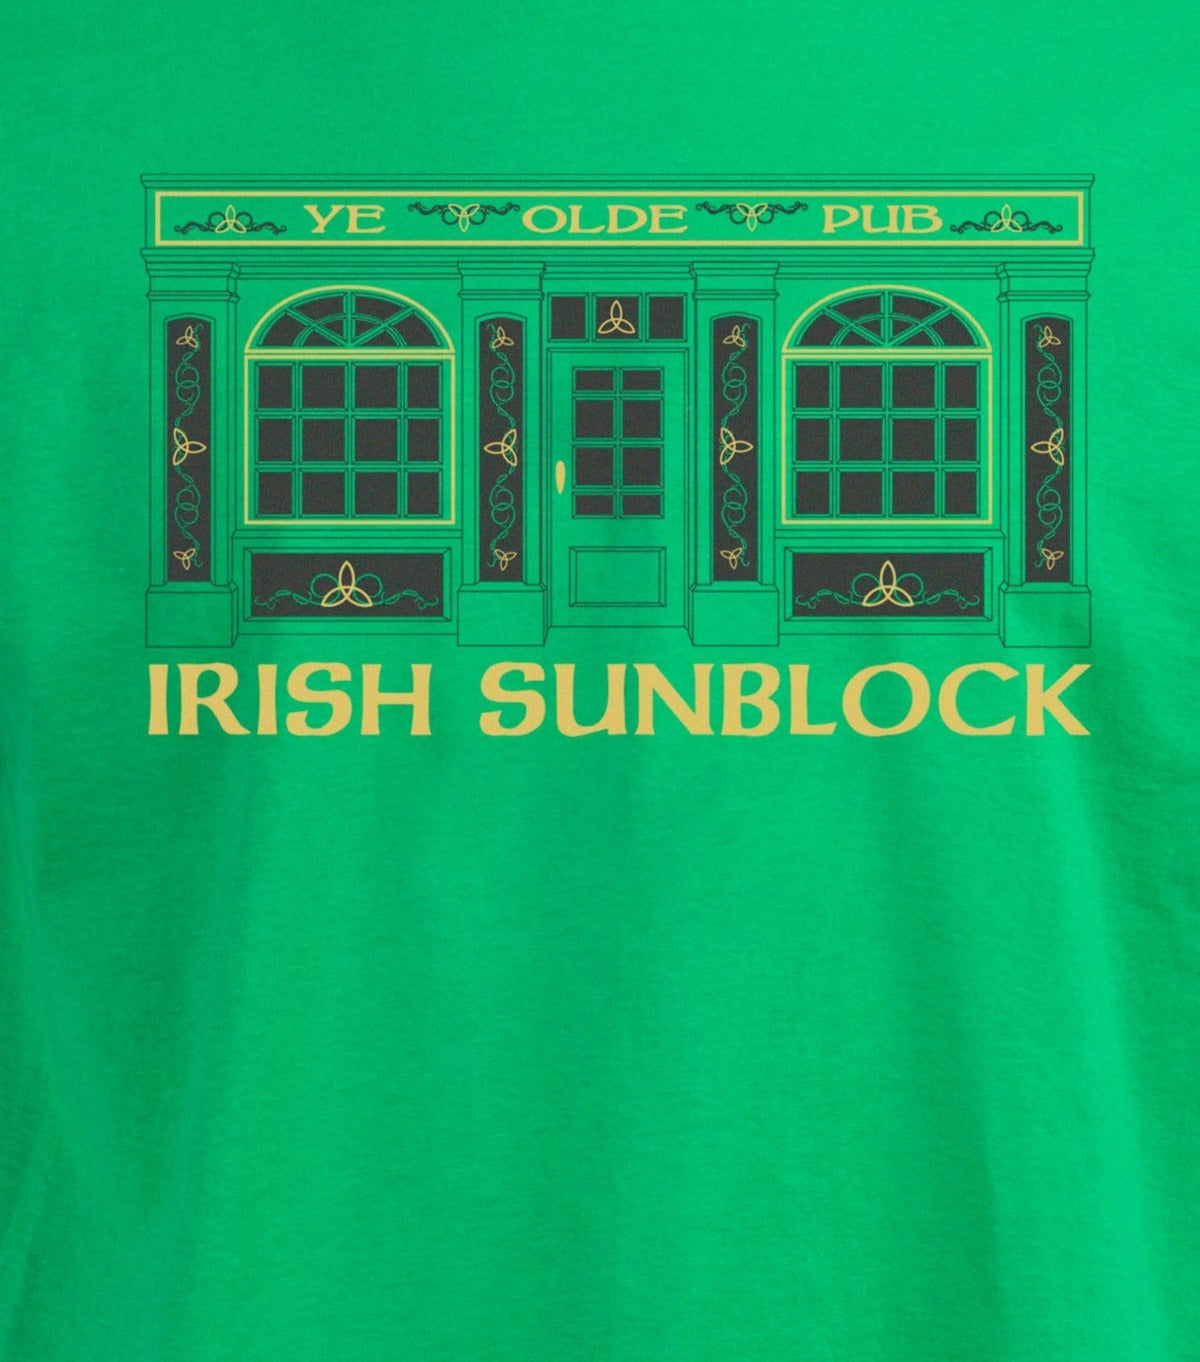 Irish Sunblock - St. Patrick's Day Funny Pub Drinking Party T-shirt - Women's